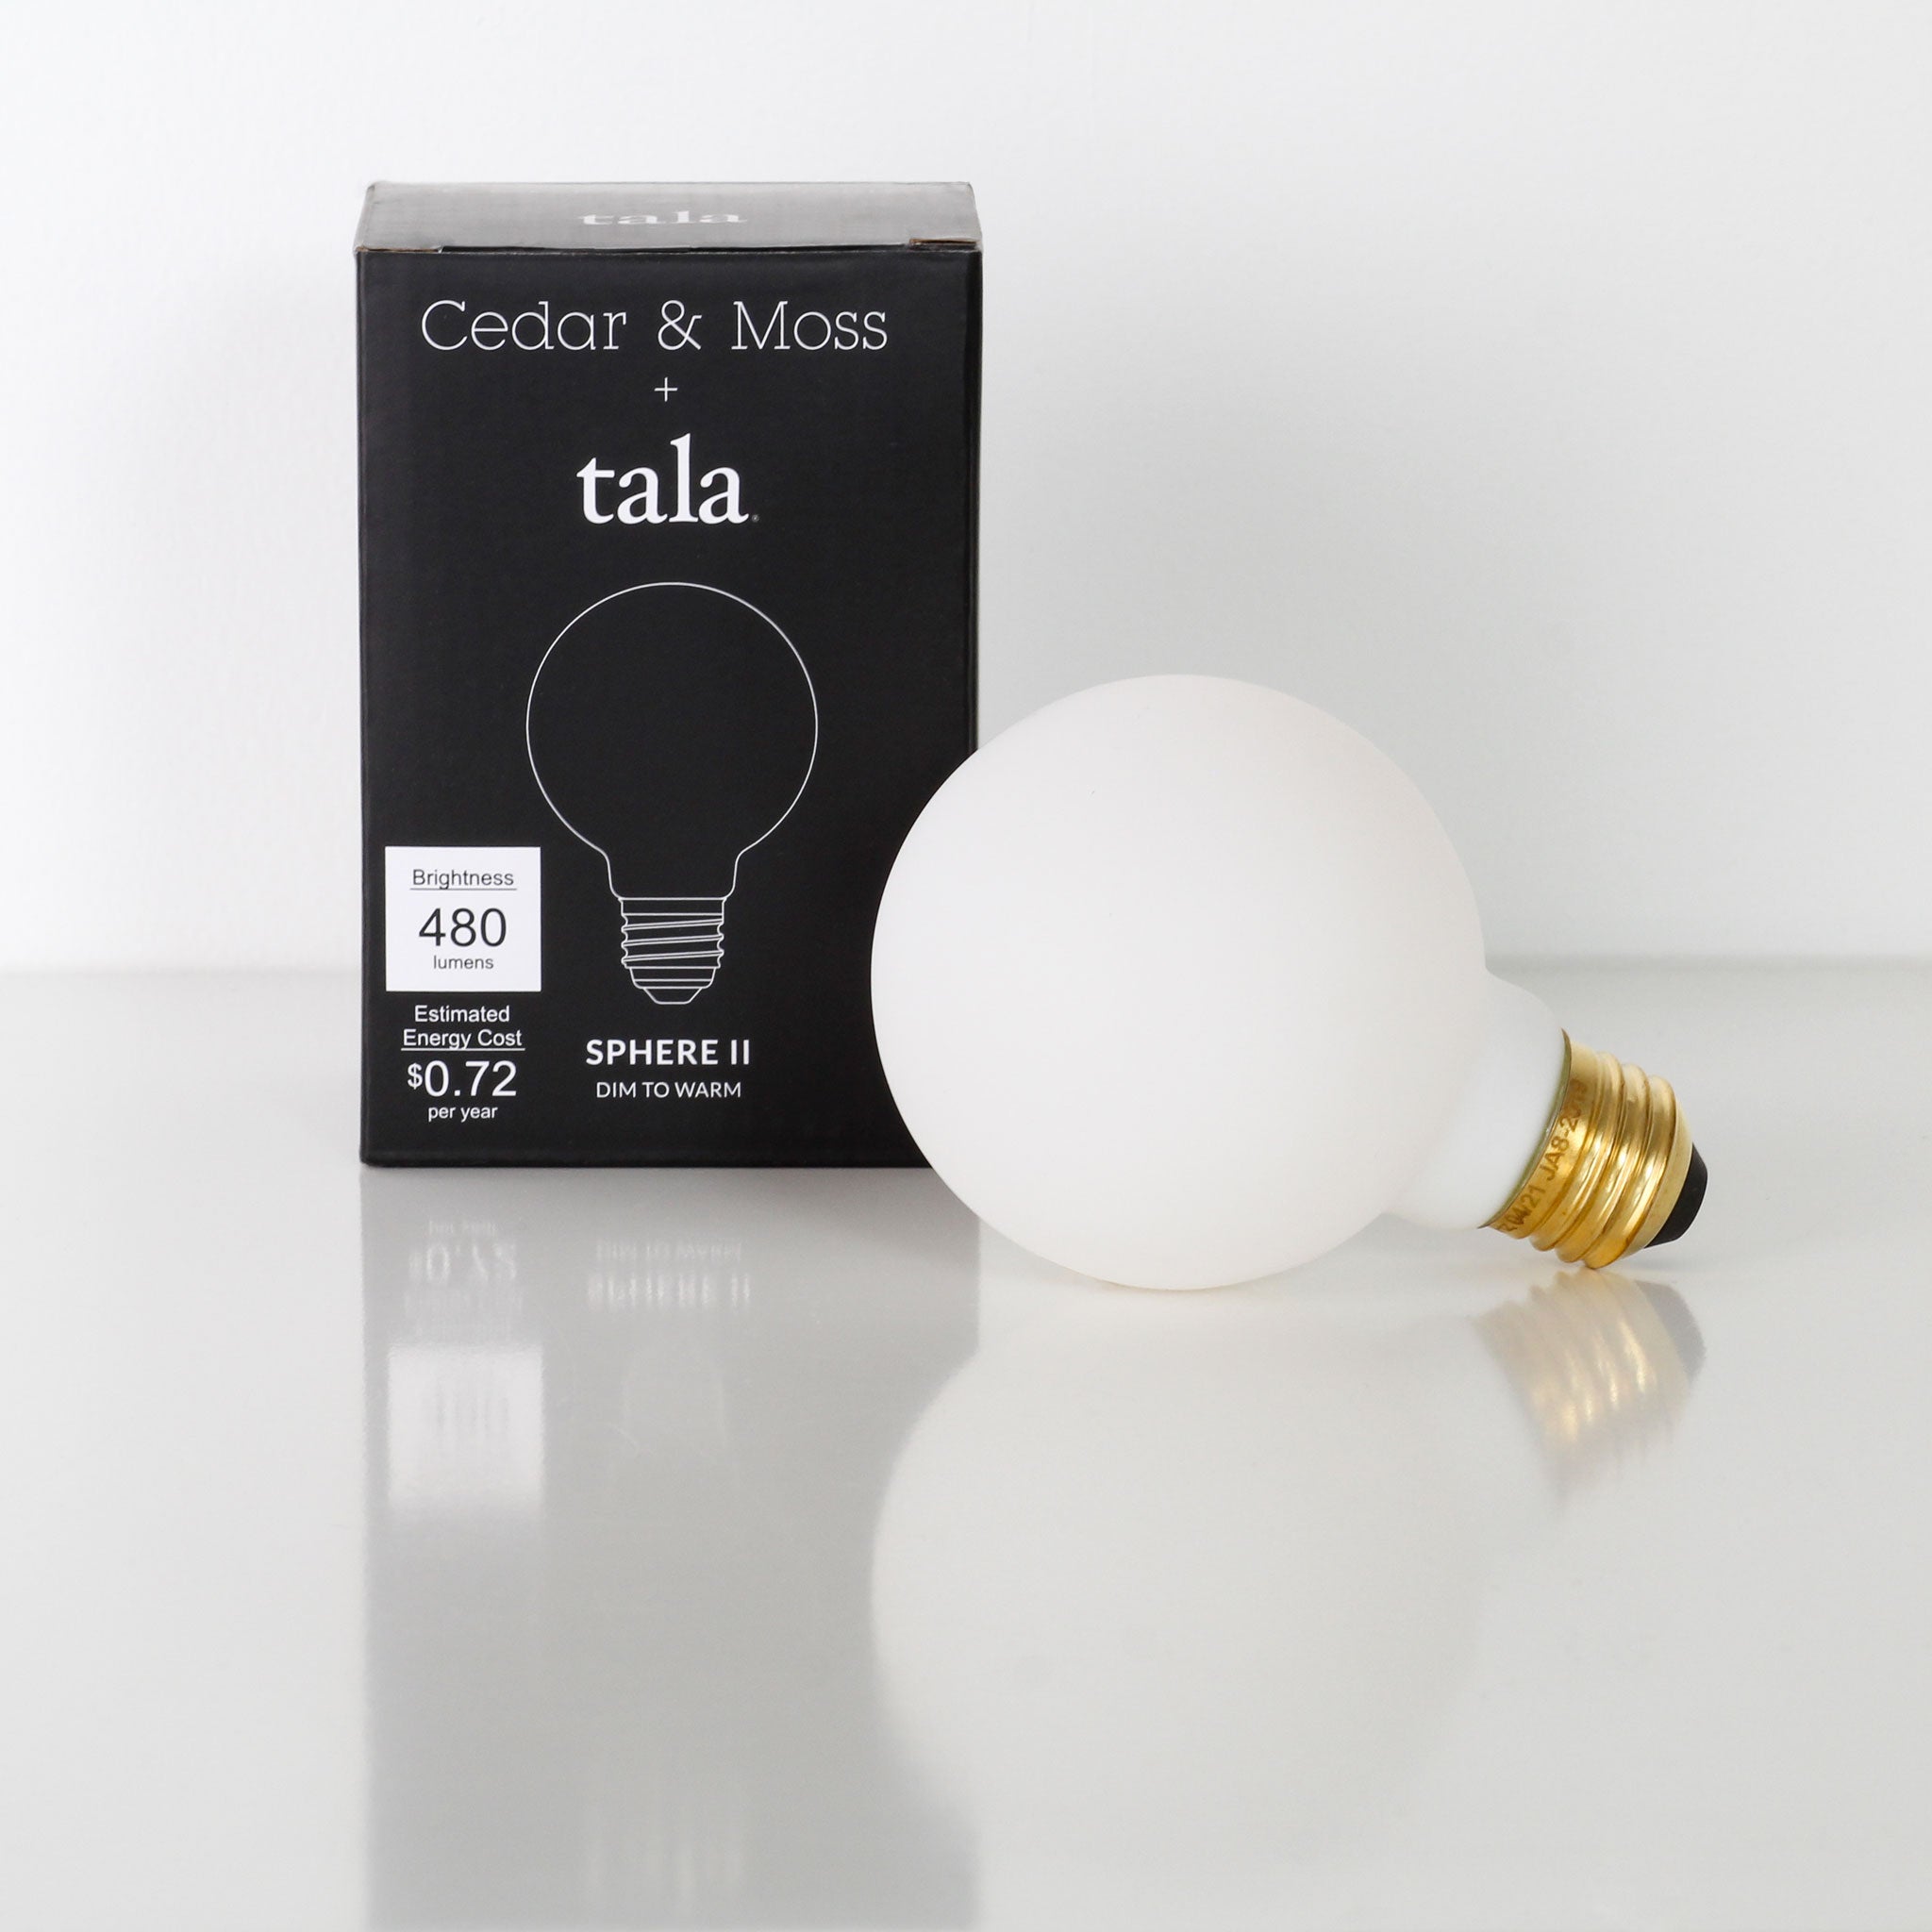 Tala LED Light Bulb Sphere II by Cedar & Moss